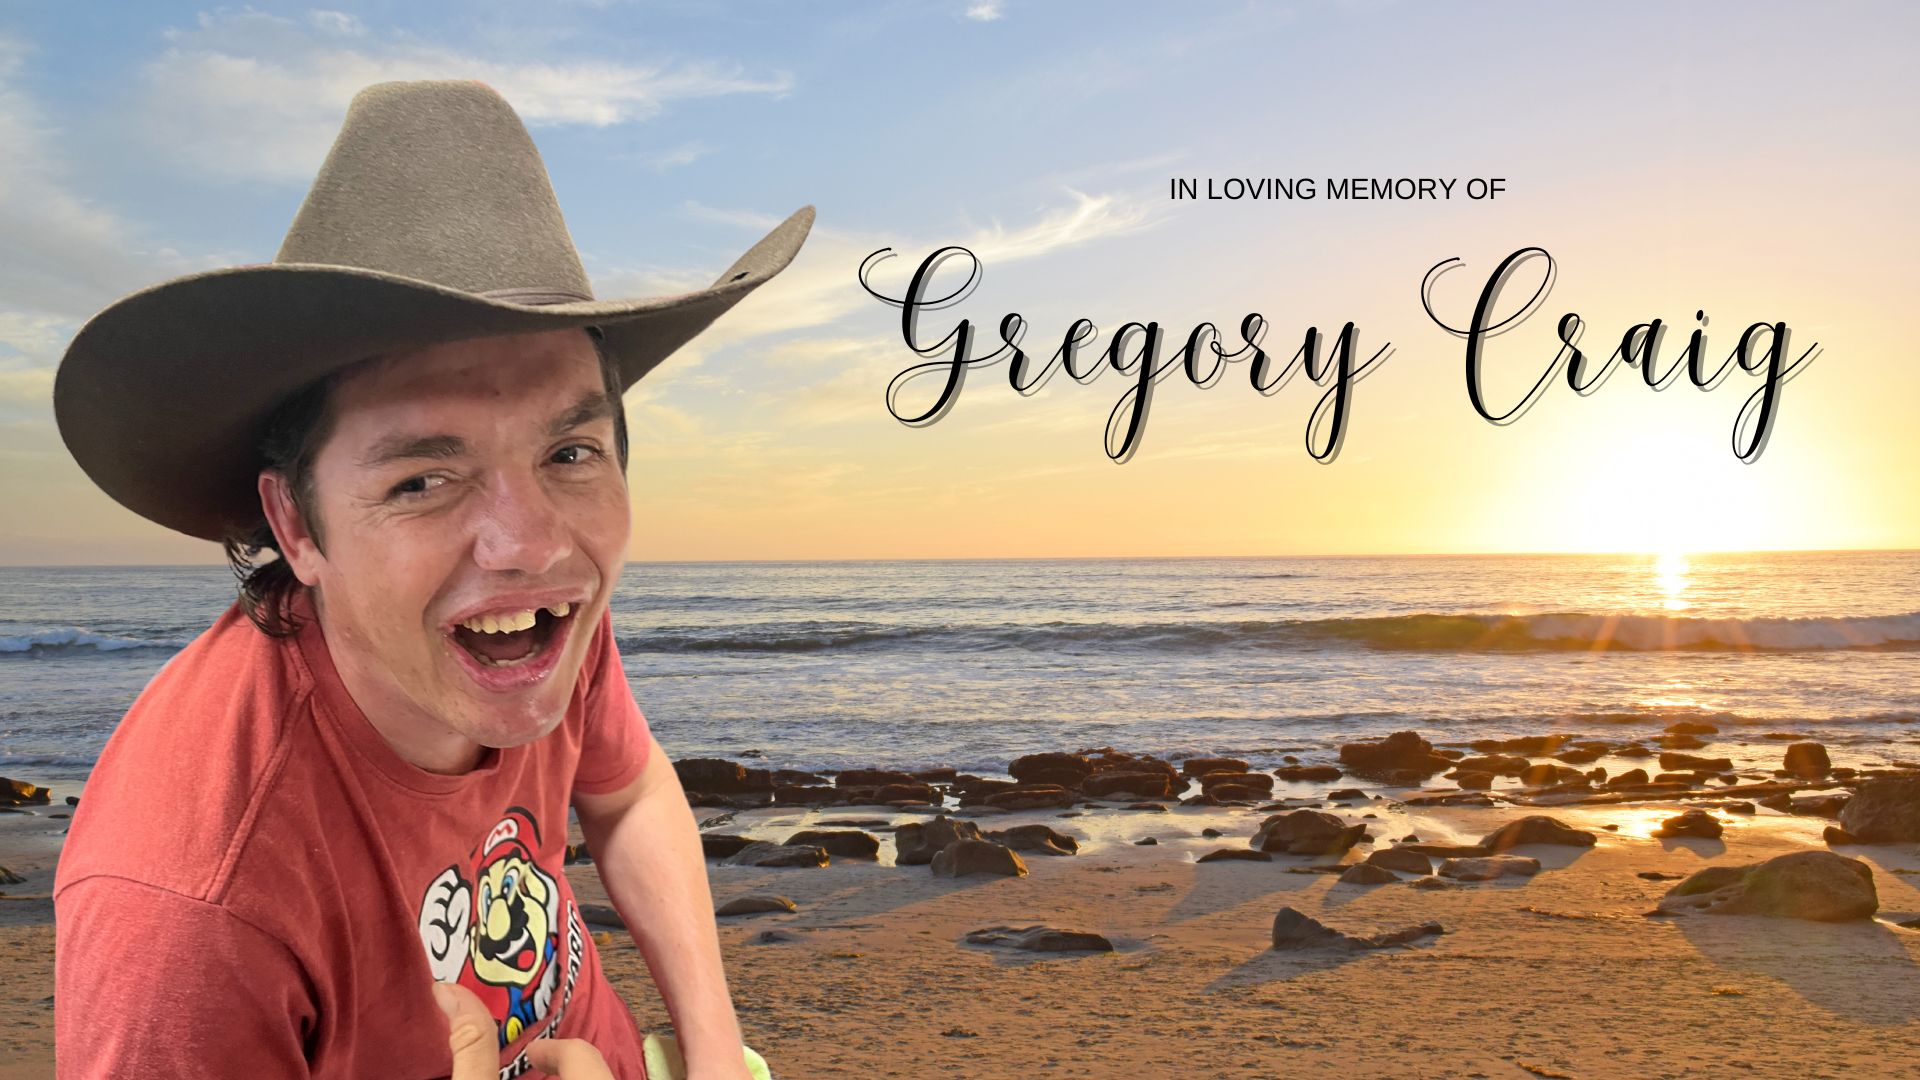 Gregory Craig